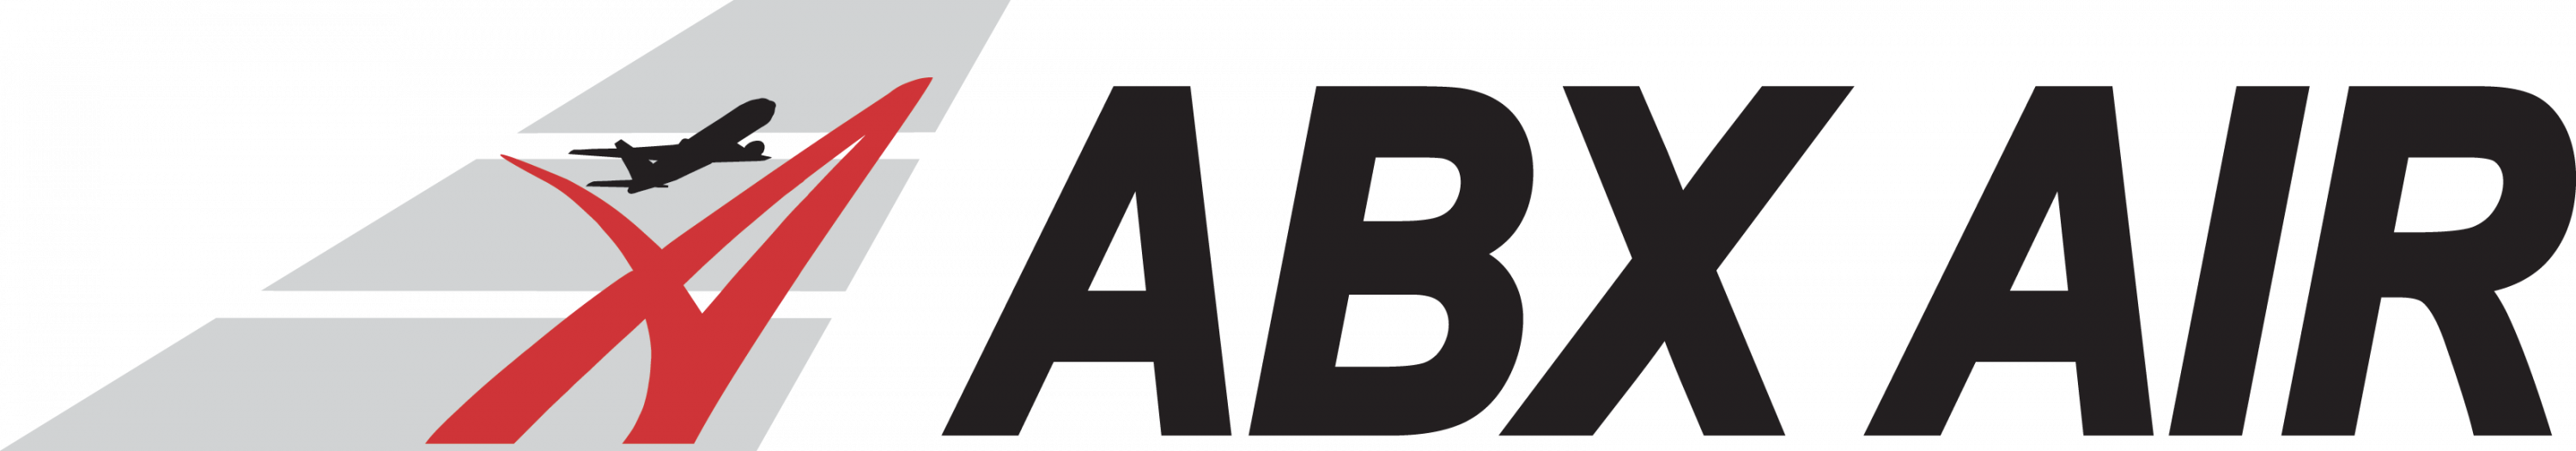 ABX Air's Image